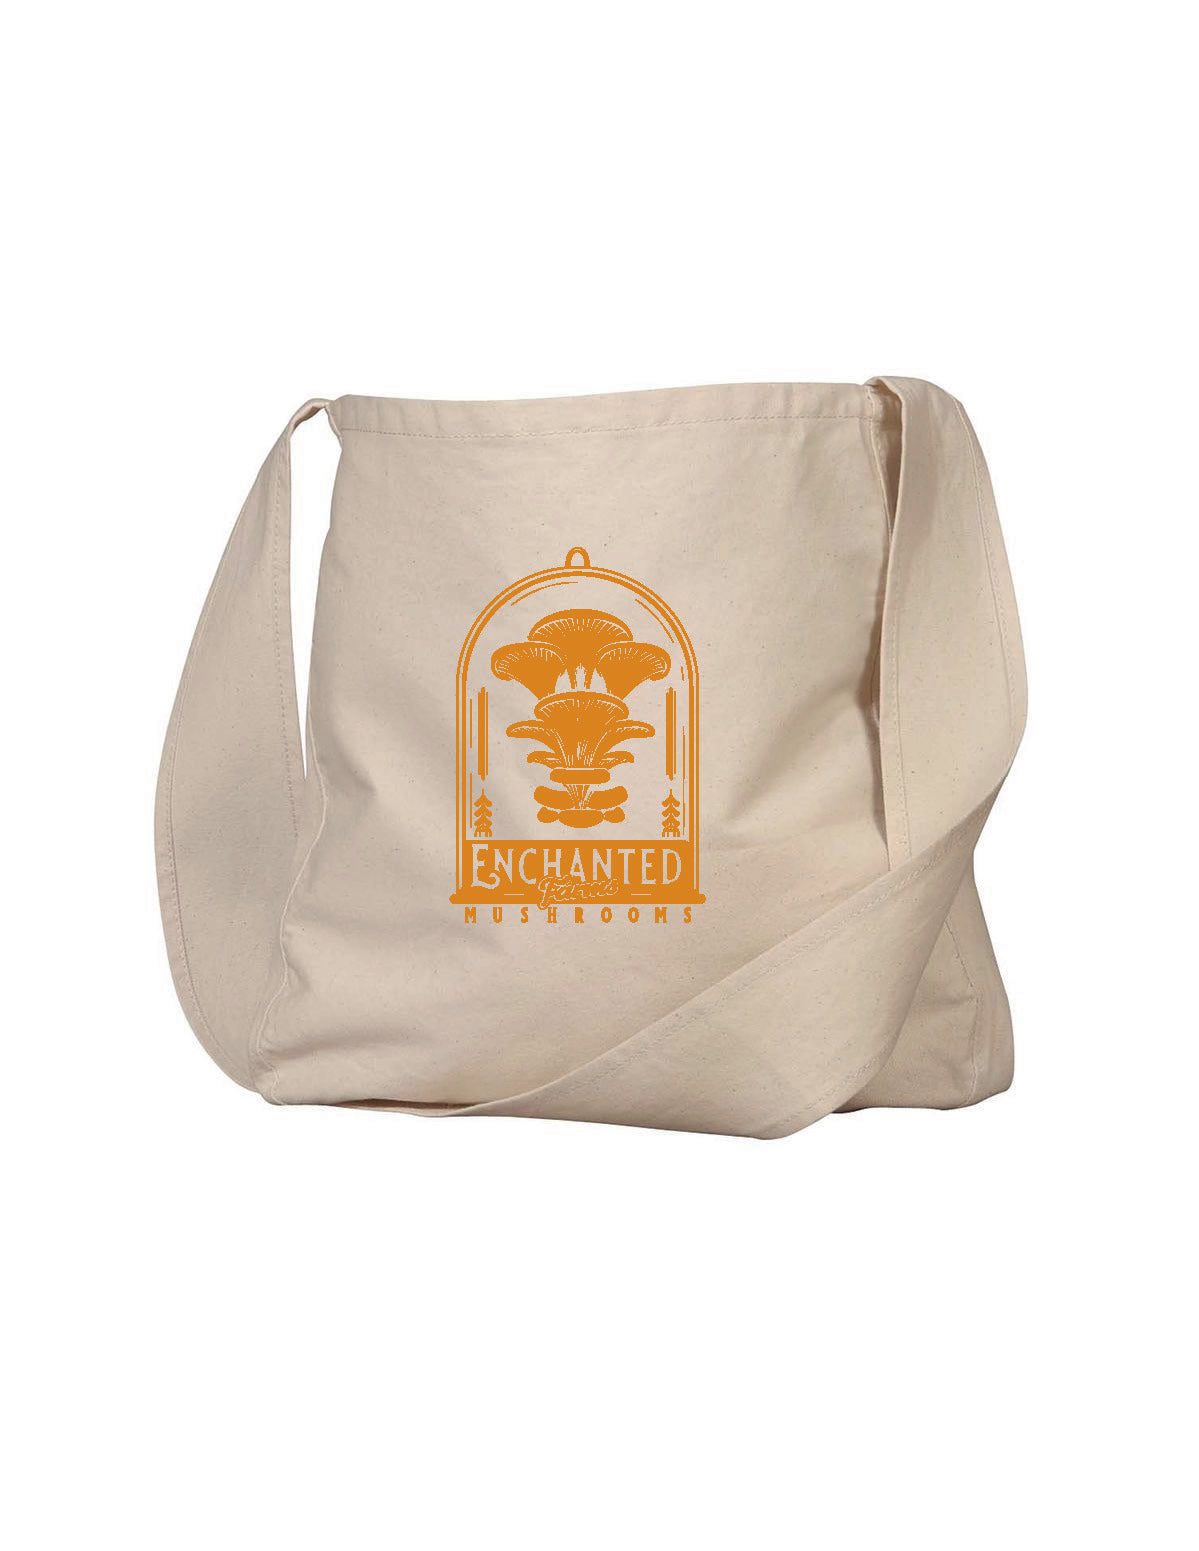 EFM Tote Bag 9 oz Organic Cotton (Earth Friendly)